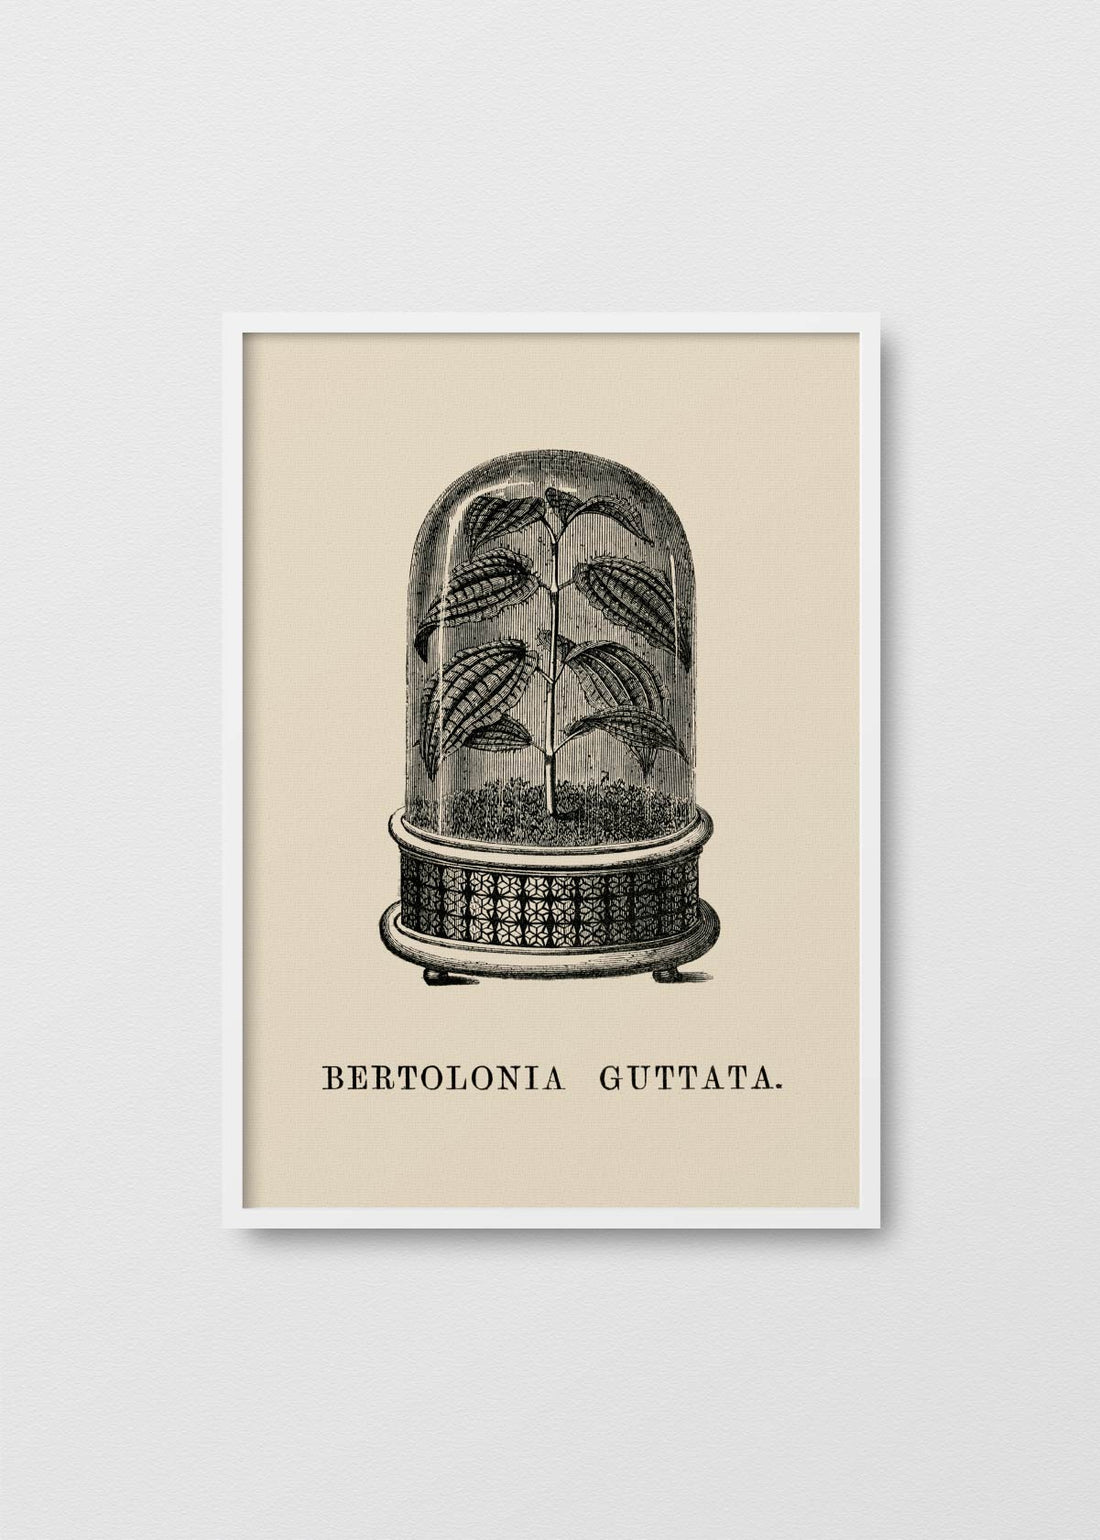 Bertolonia Guttata - Testimoniaprints